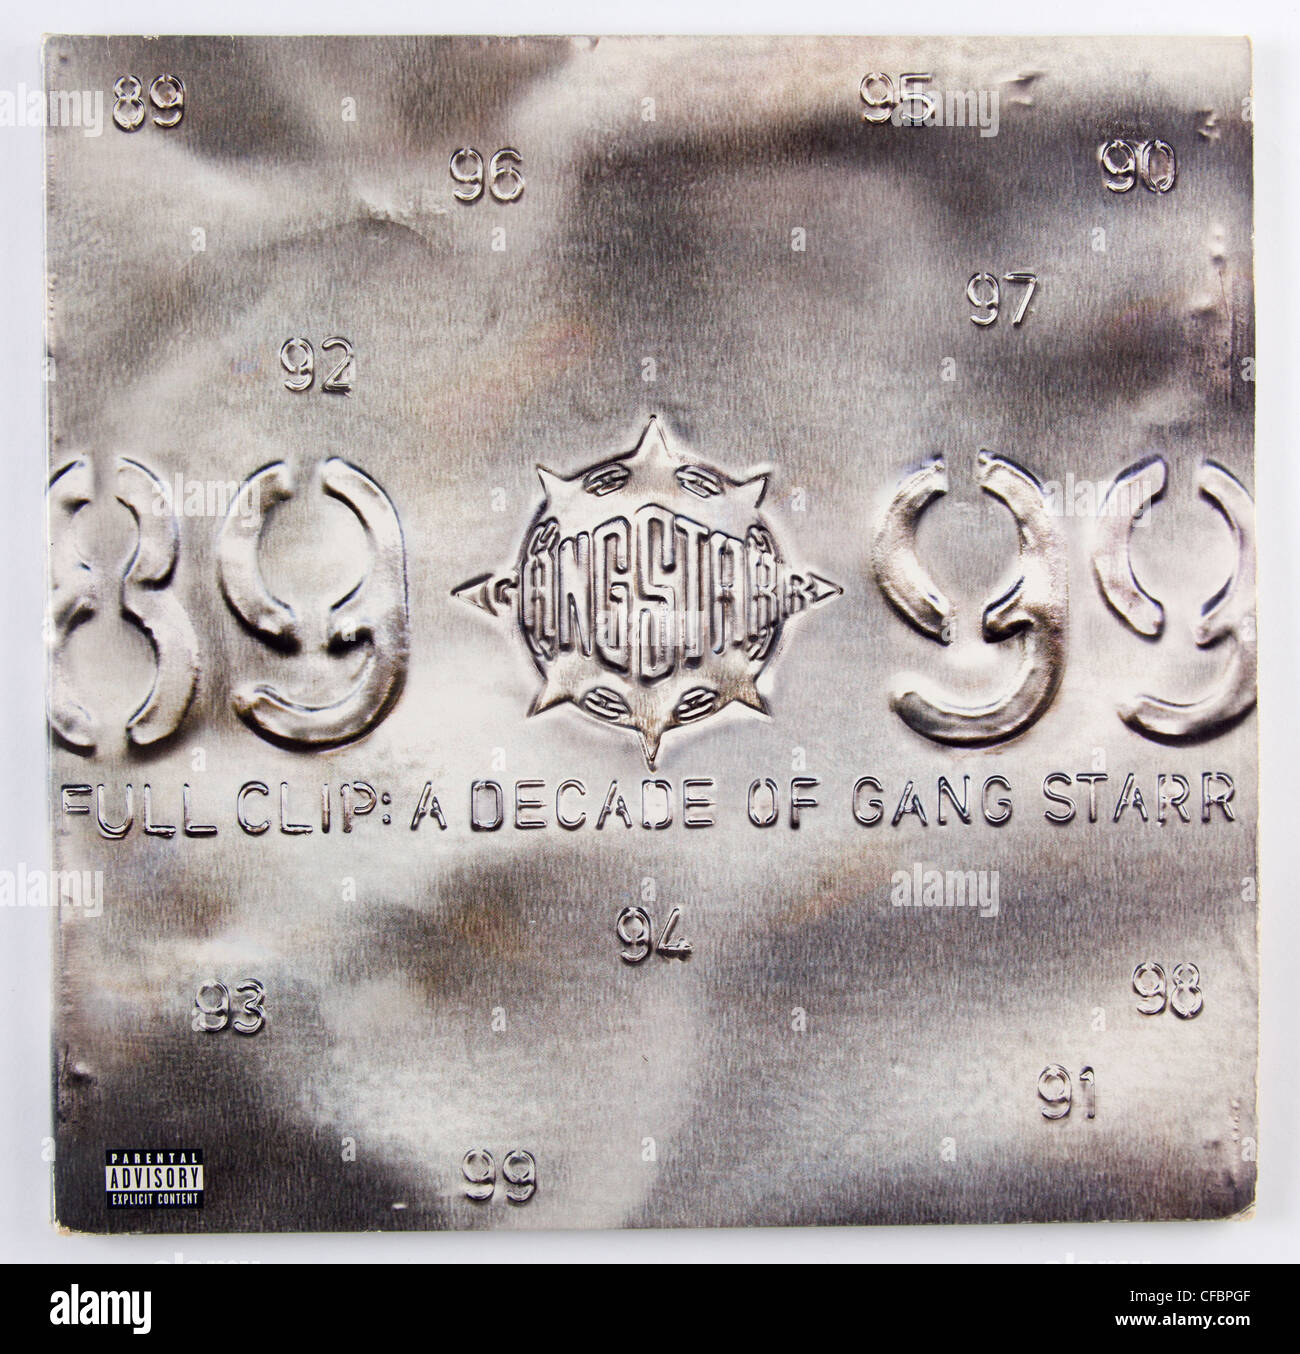 Ganstarr, Full Clip compilation album cover Stock Photo - Alamy